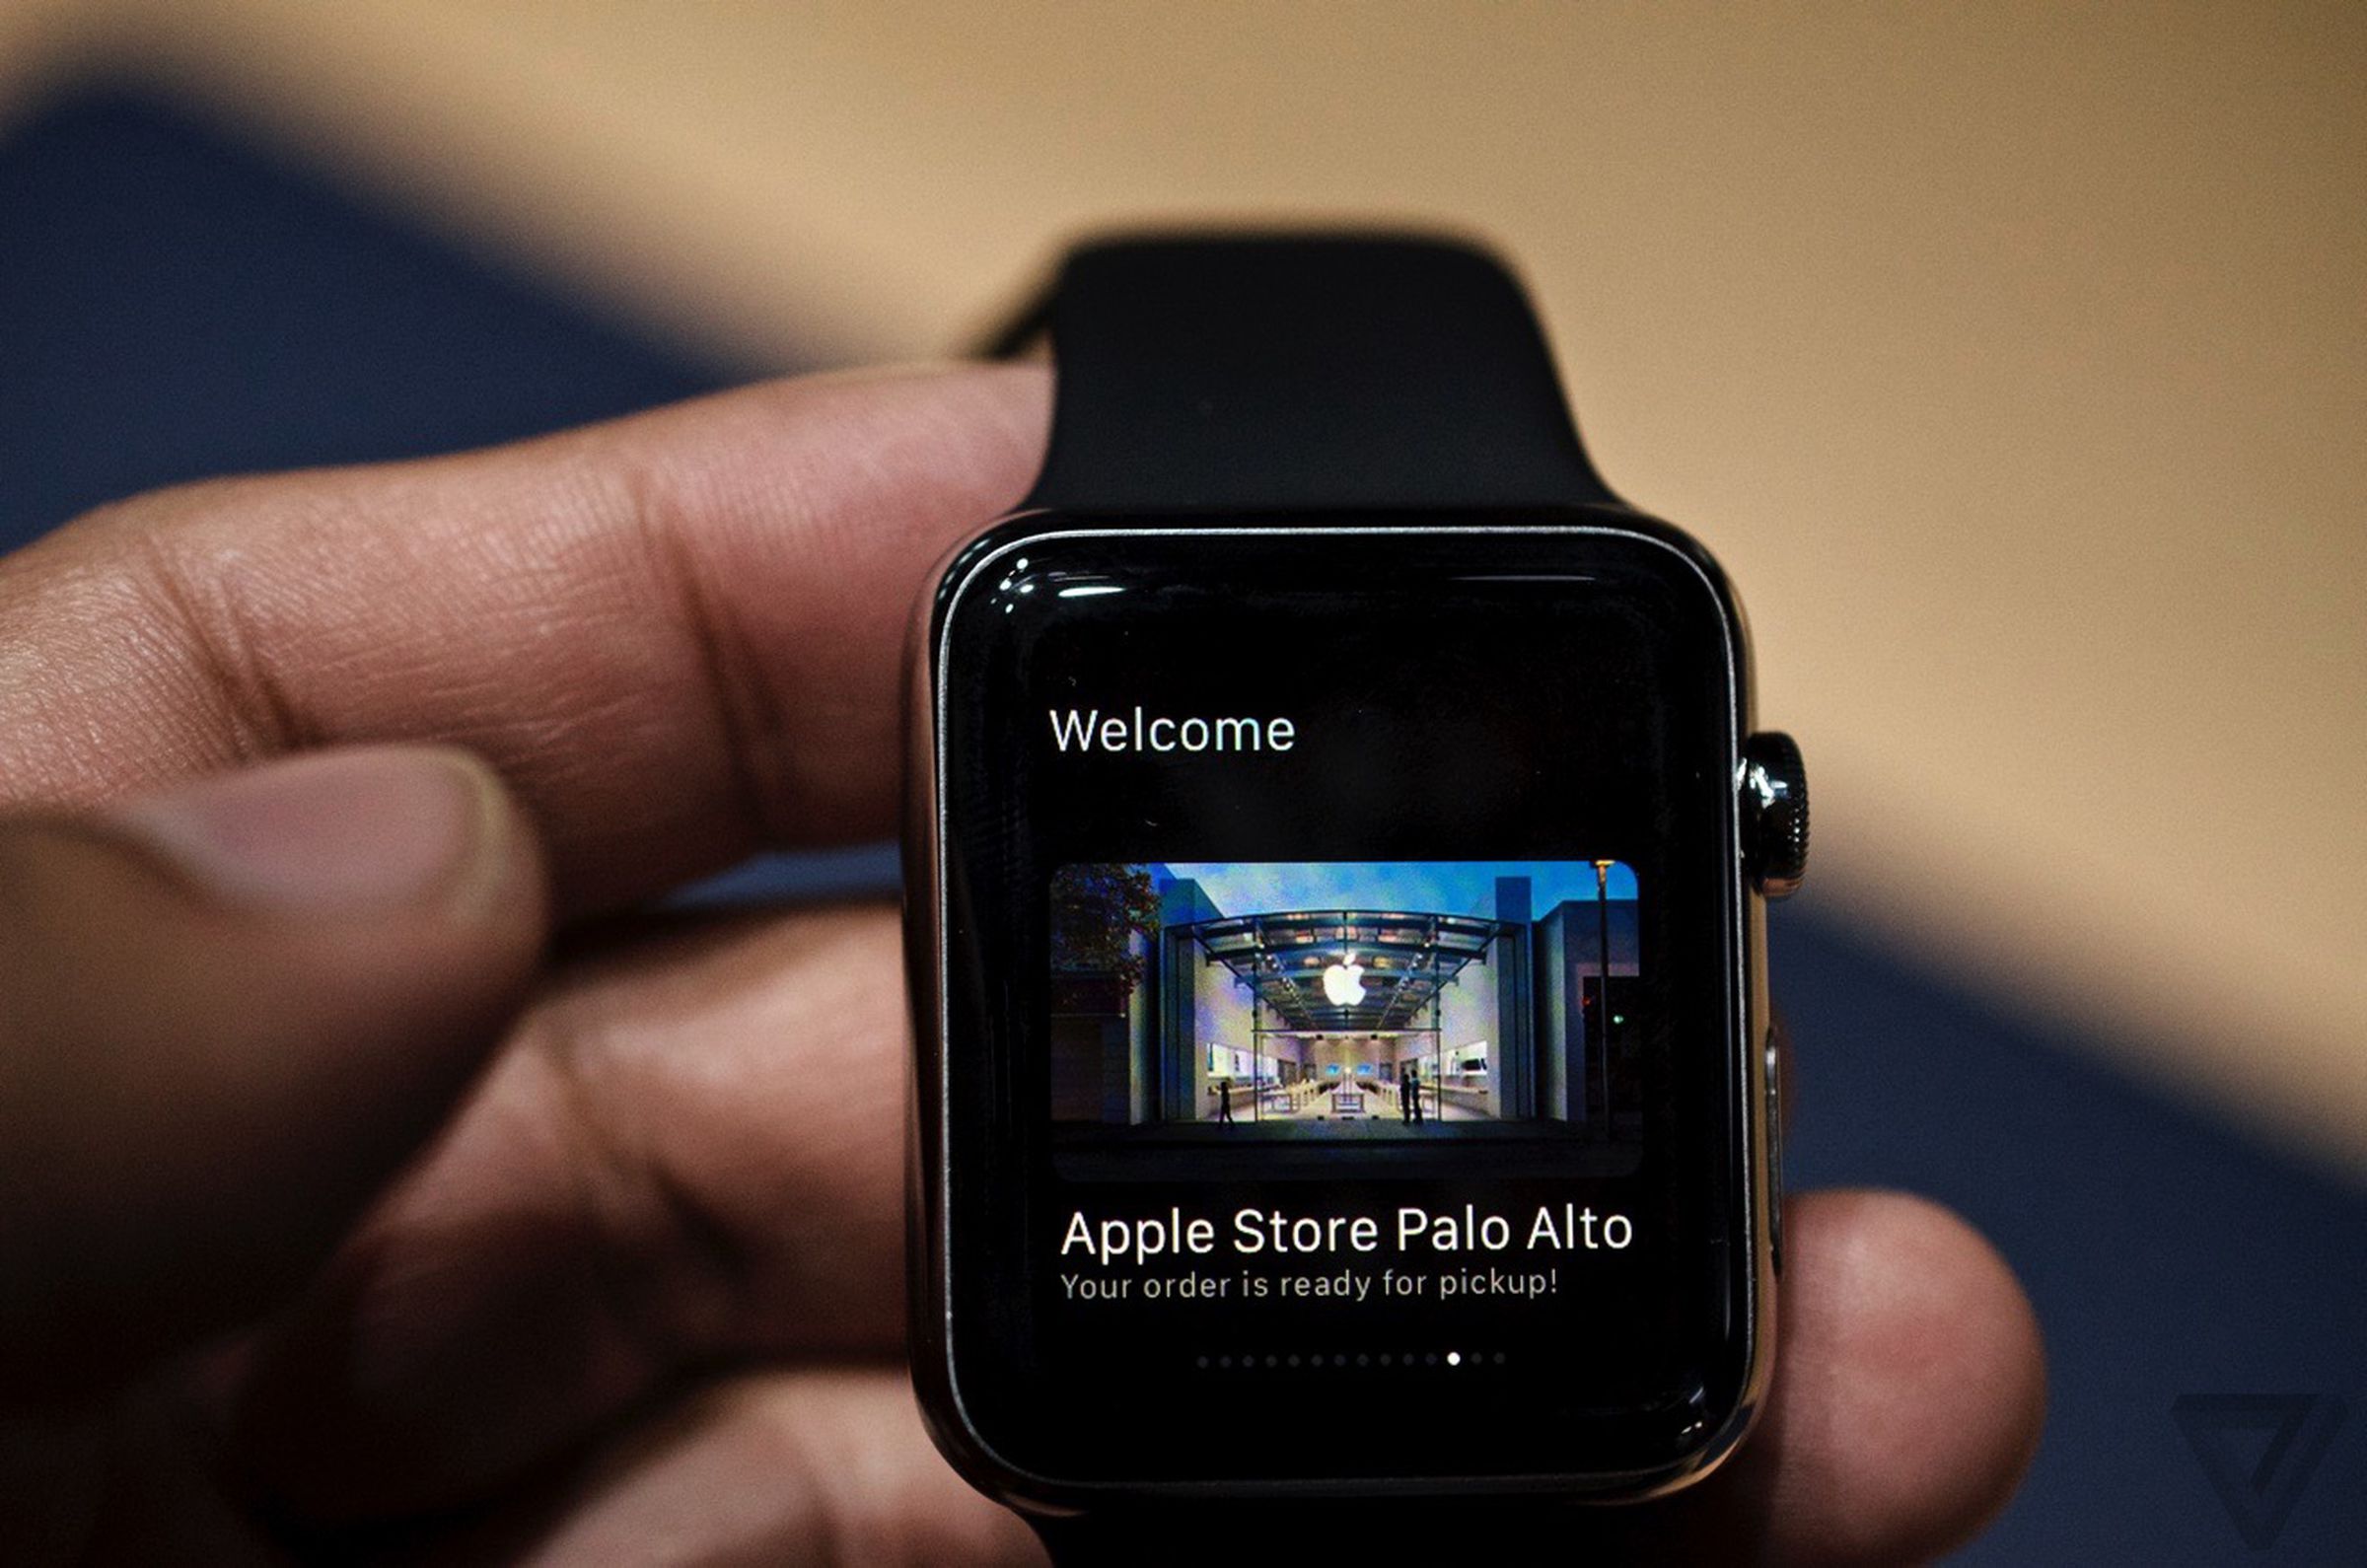 Apple Watch hands-on photos